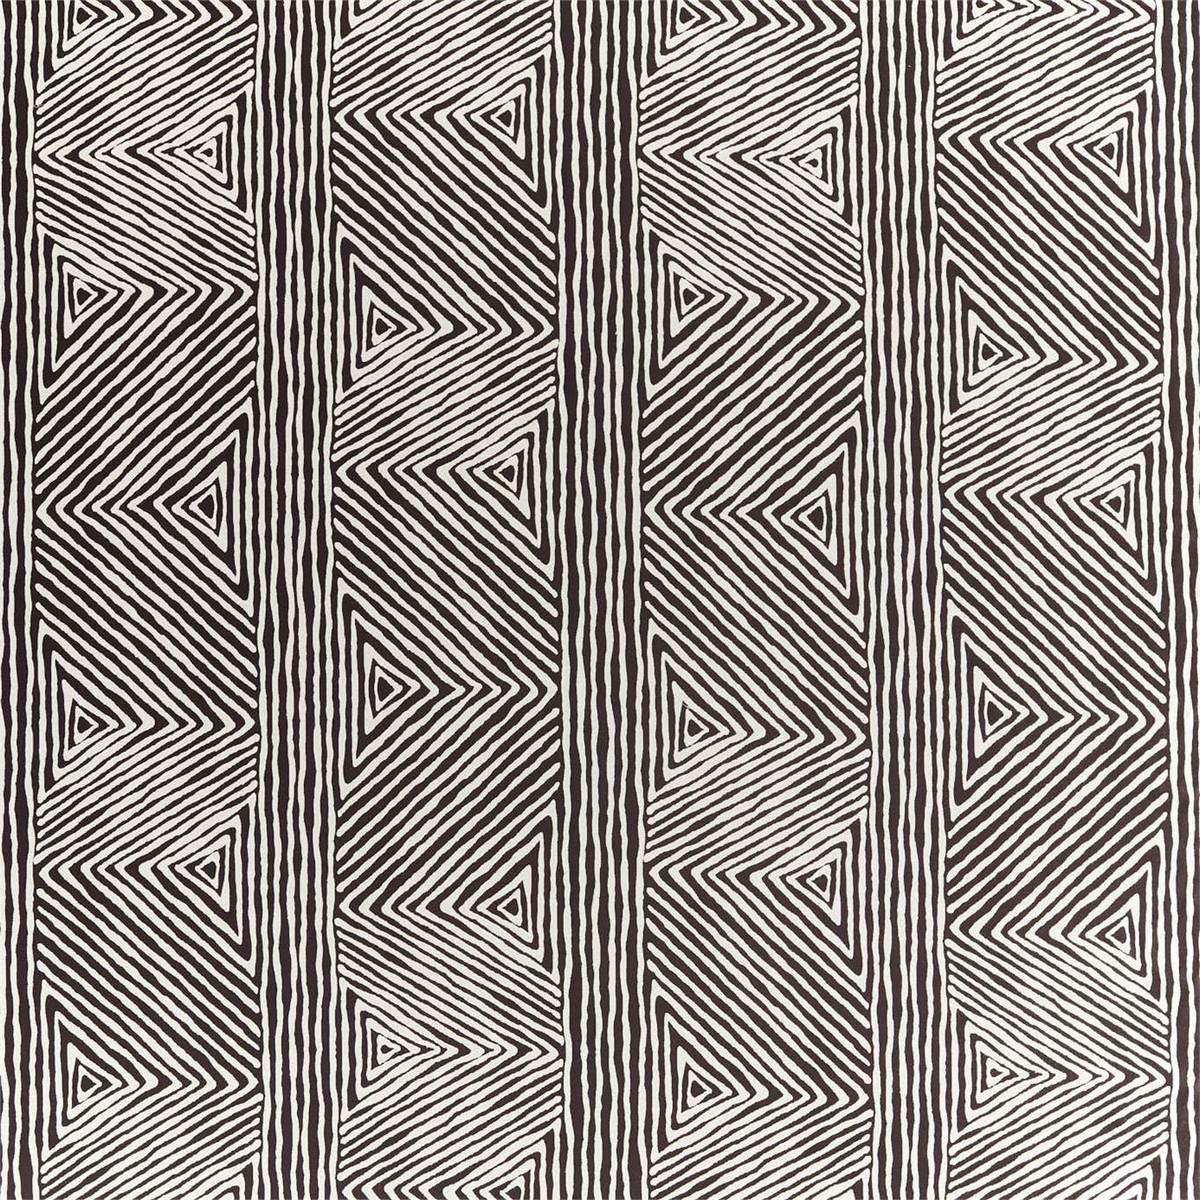 Zamarra Zebra Fabric by Harlequin